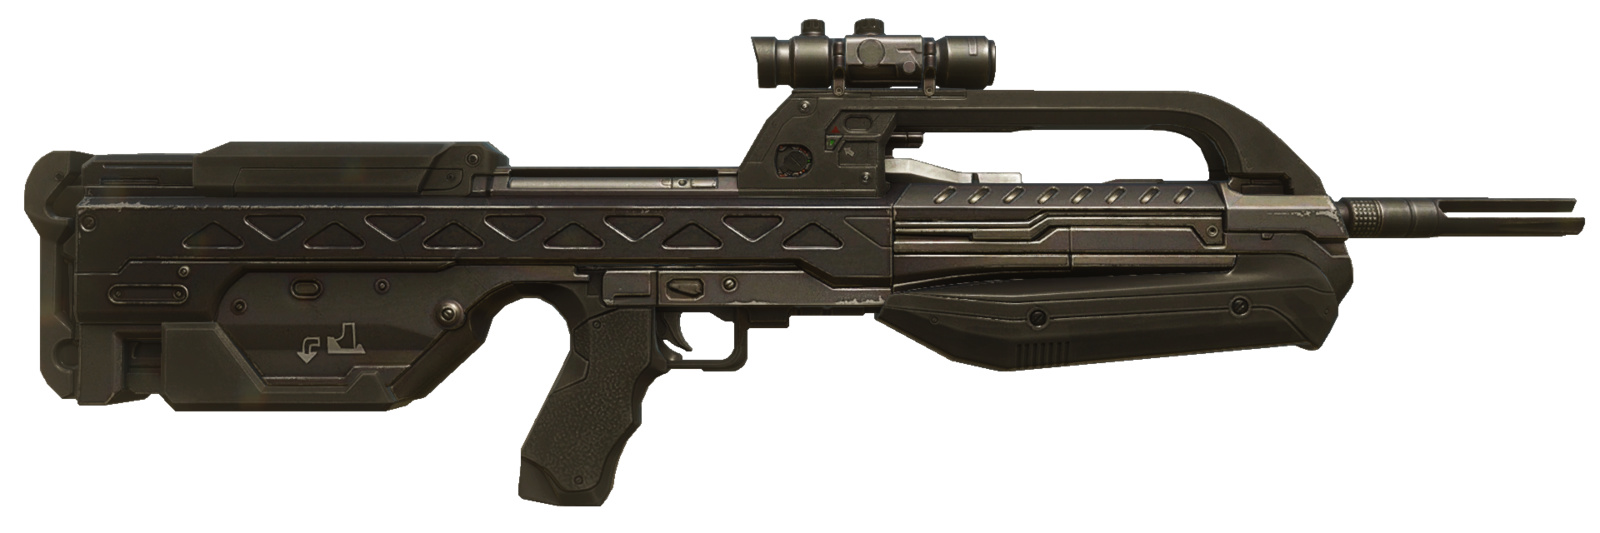 【HALO設定科普】BR55戰鬥步槍 —— 可靠的攻擊火力永不過時